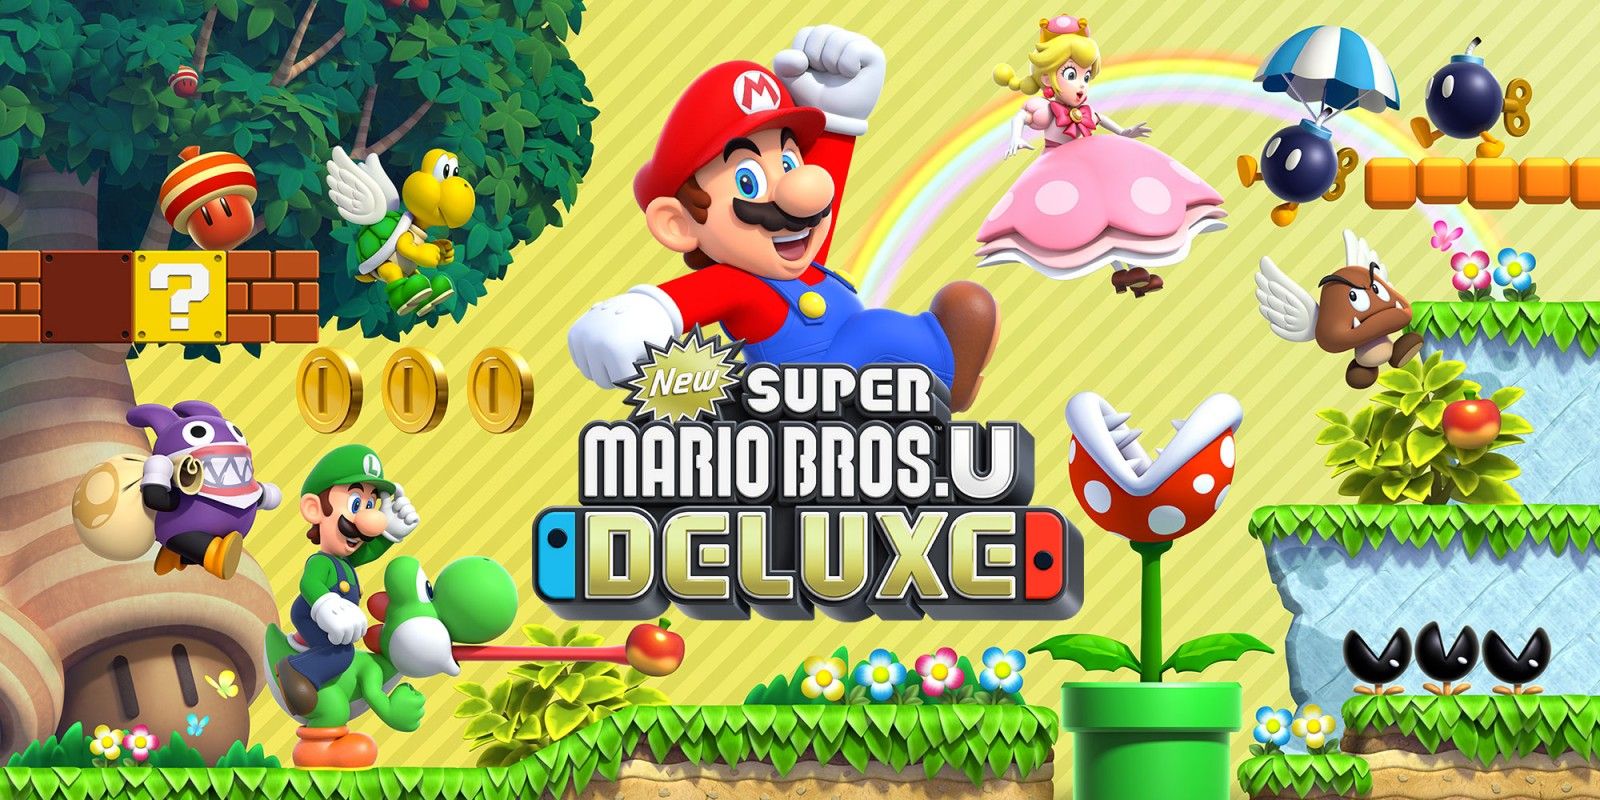 The New Super Mario Bros. U Deluxe Cover